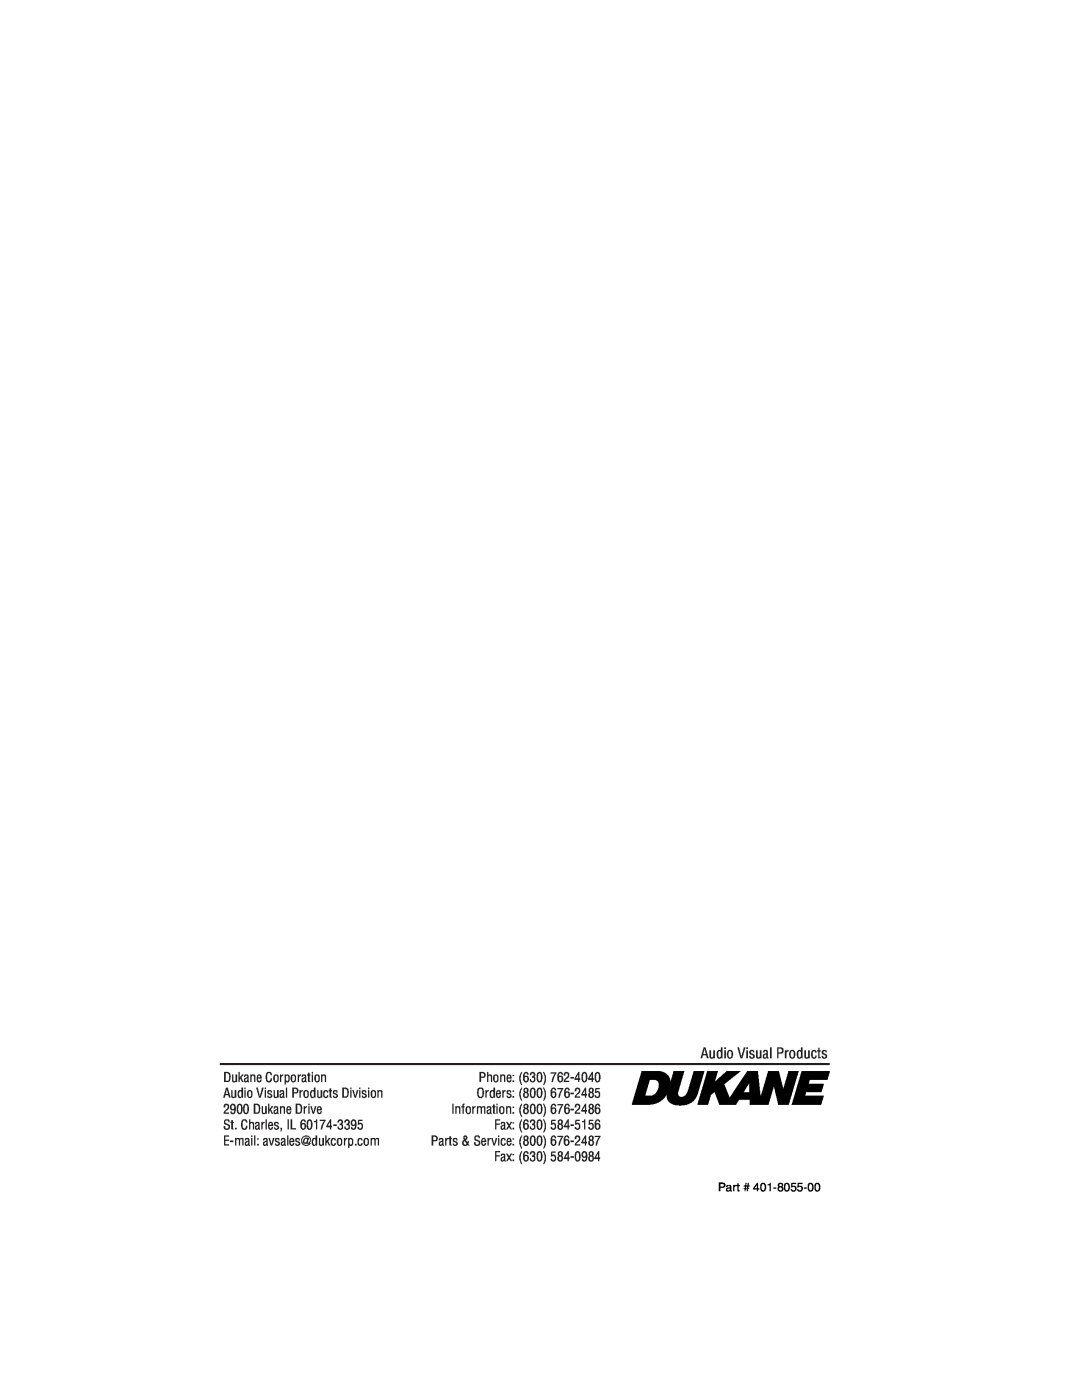 Dukane 8055 user manual Audio Visual Products, Parts & Service 